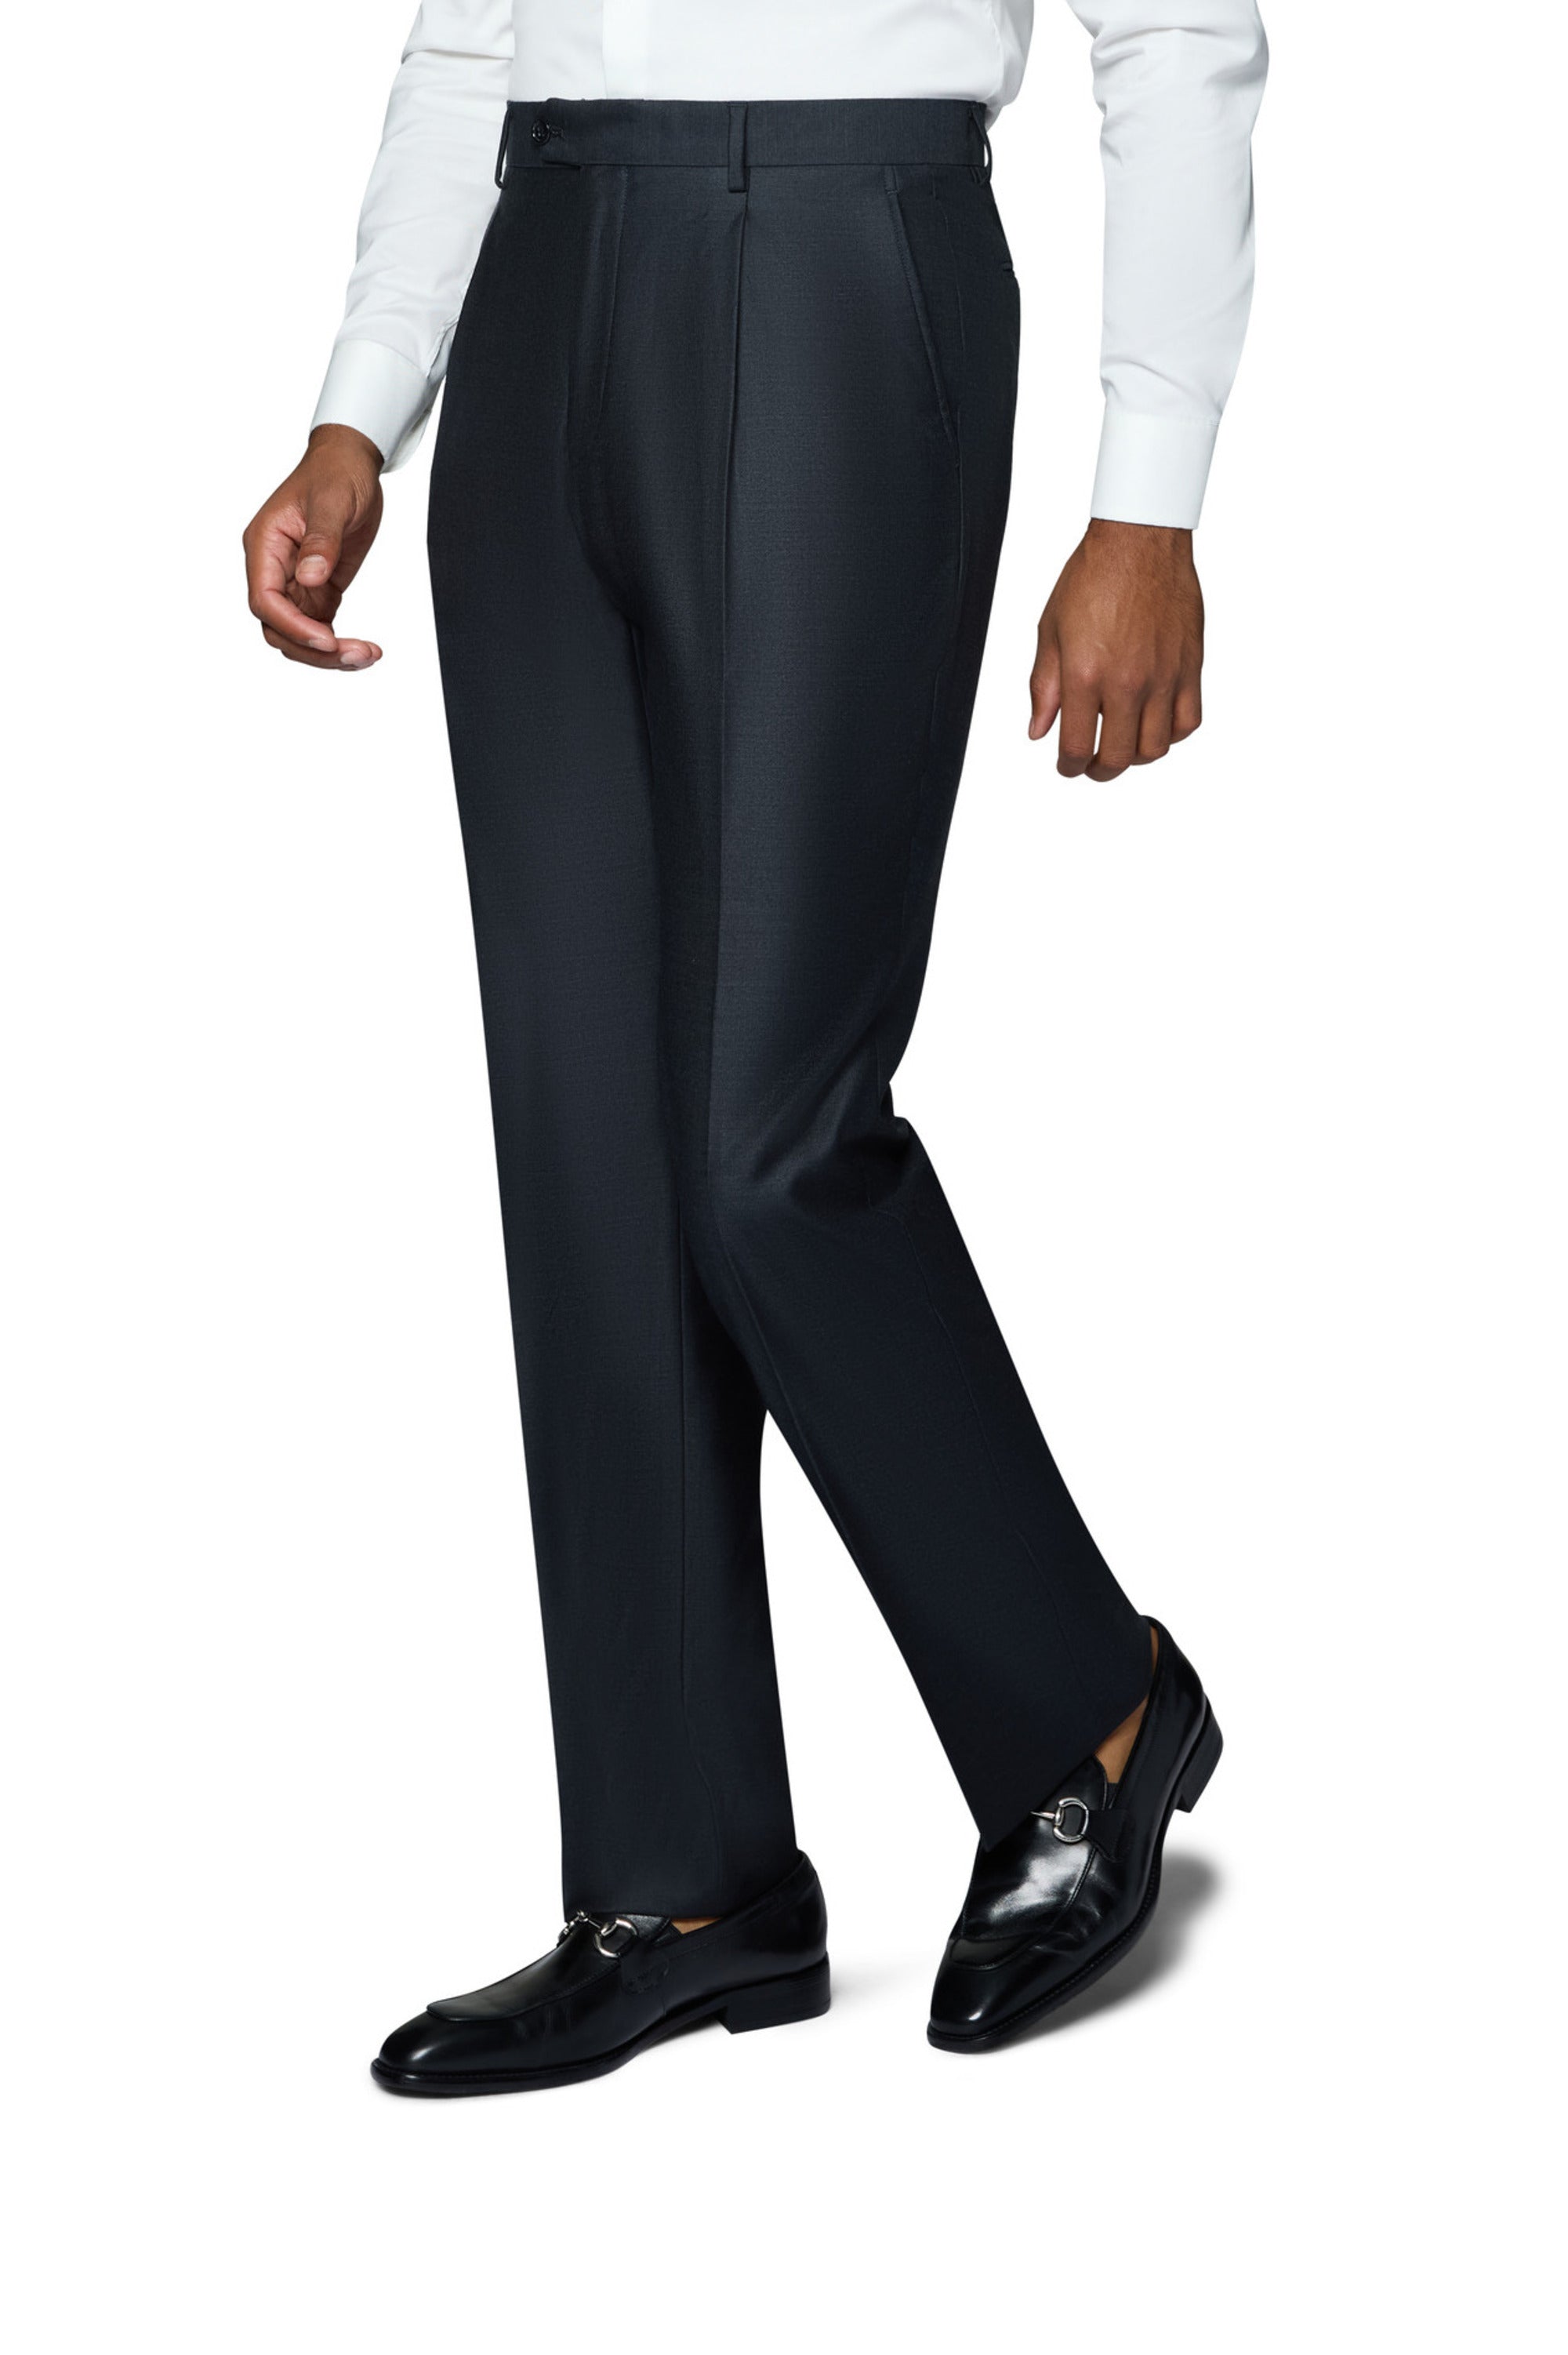 Berragamo Essex Elegant - Faille Wool Solid Suit - Charcoal